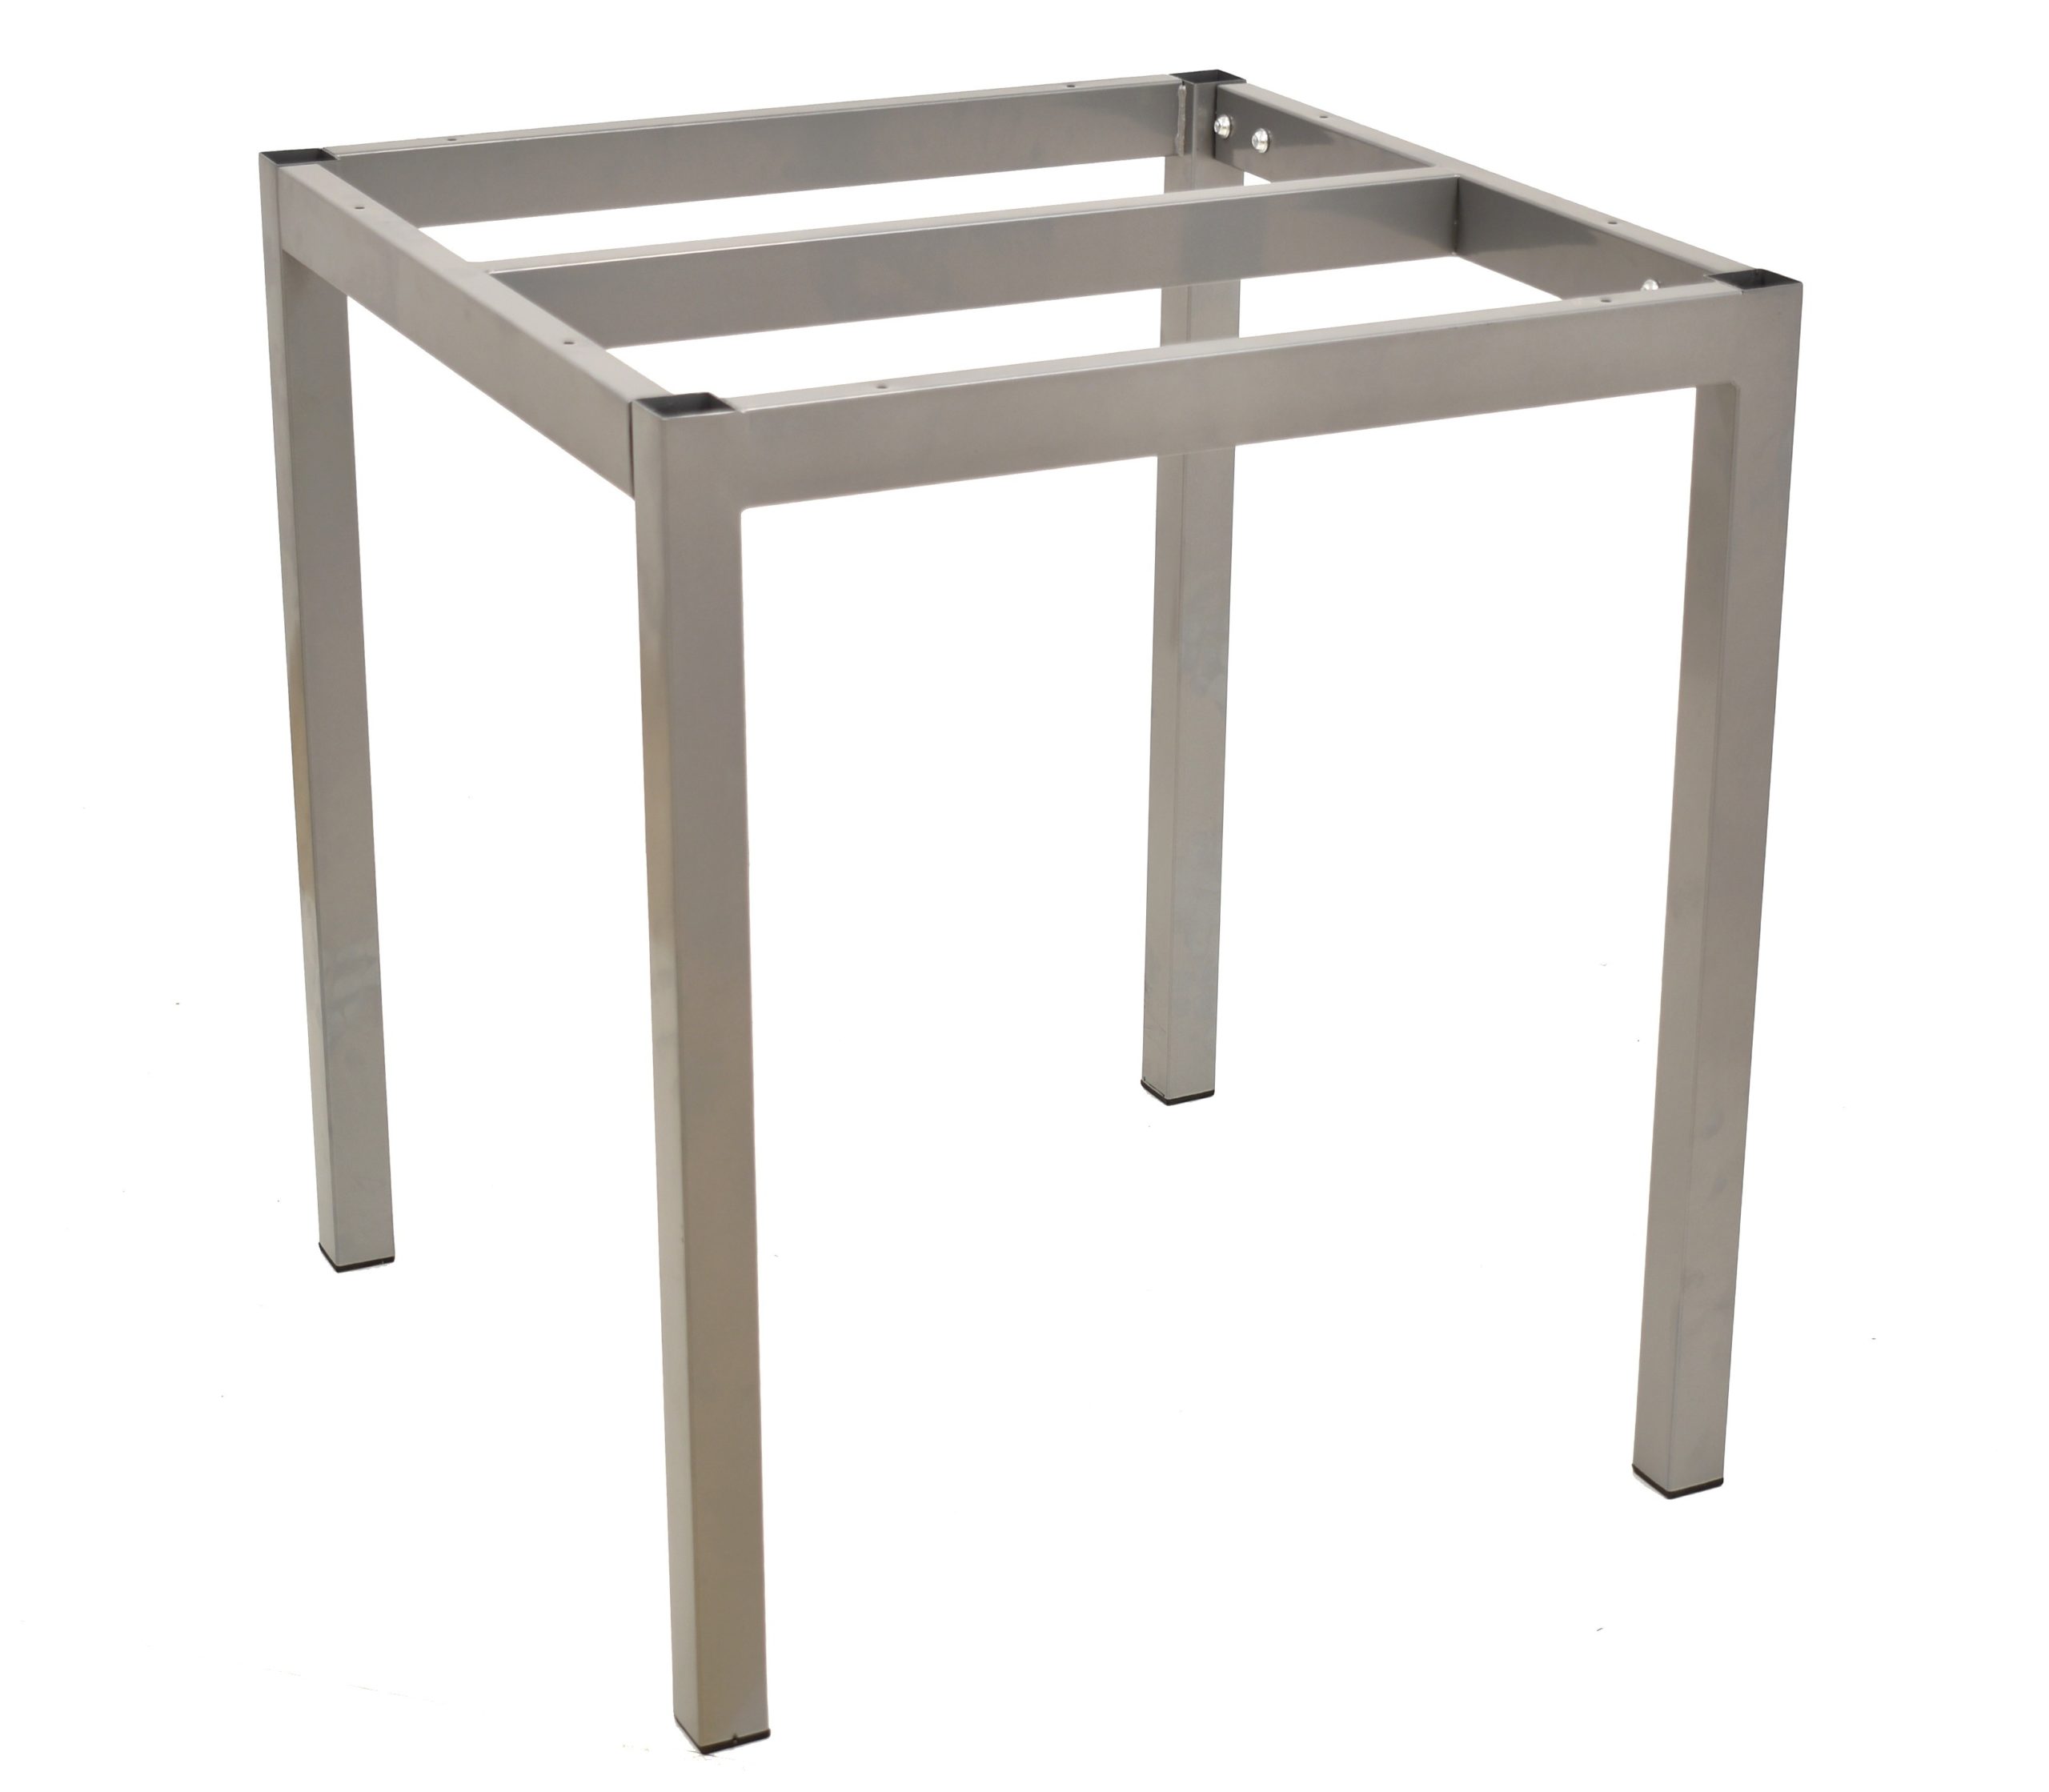 Base de mesa LIRIO, metal, gris plata, 65 x 65 cms, altura 72 cms